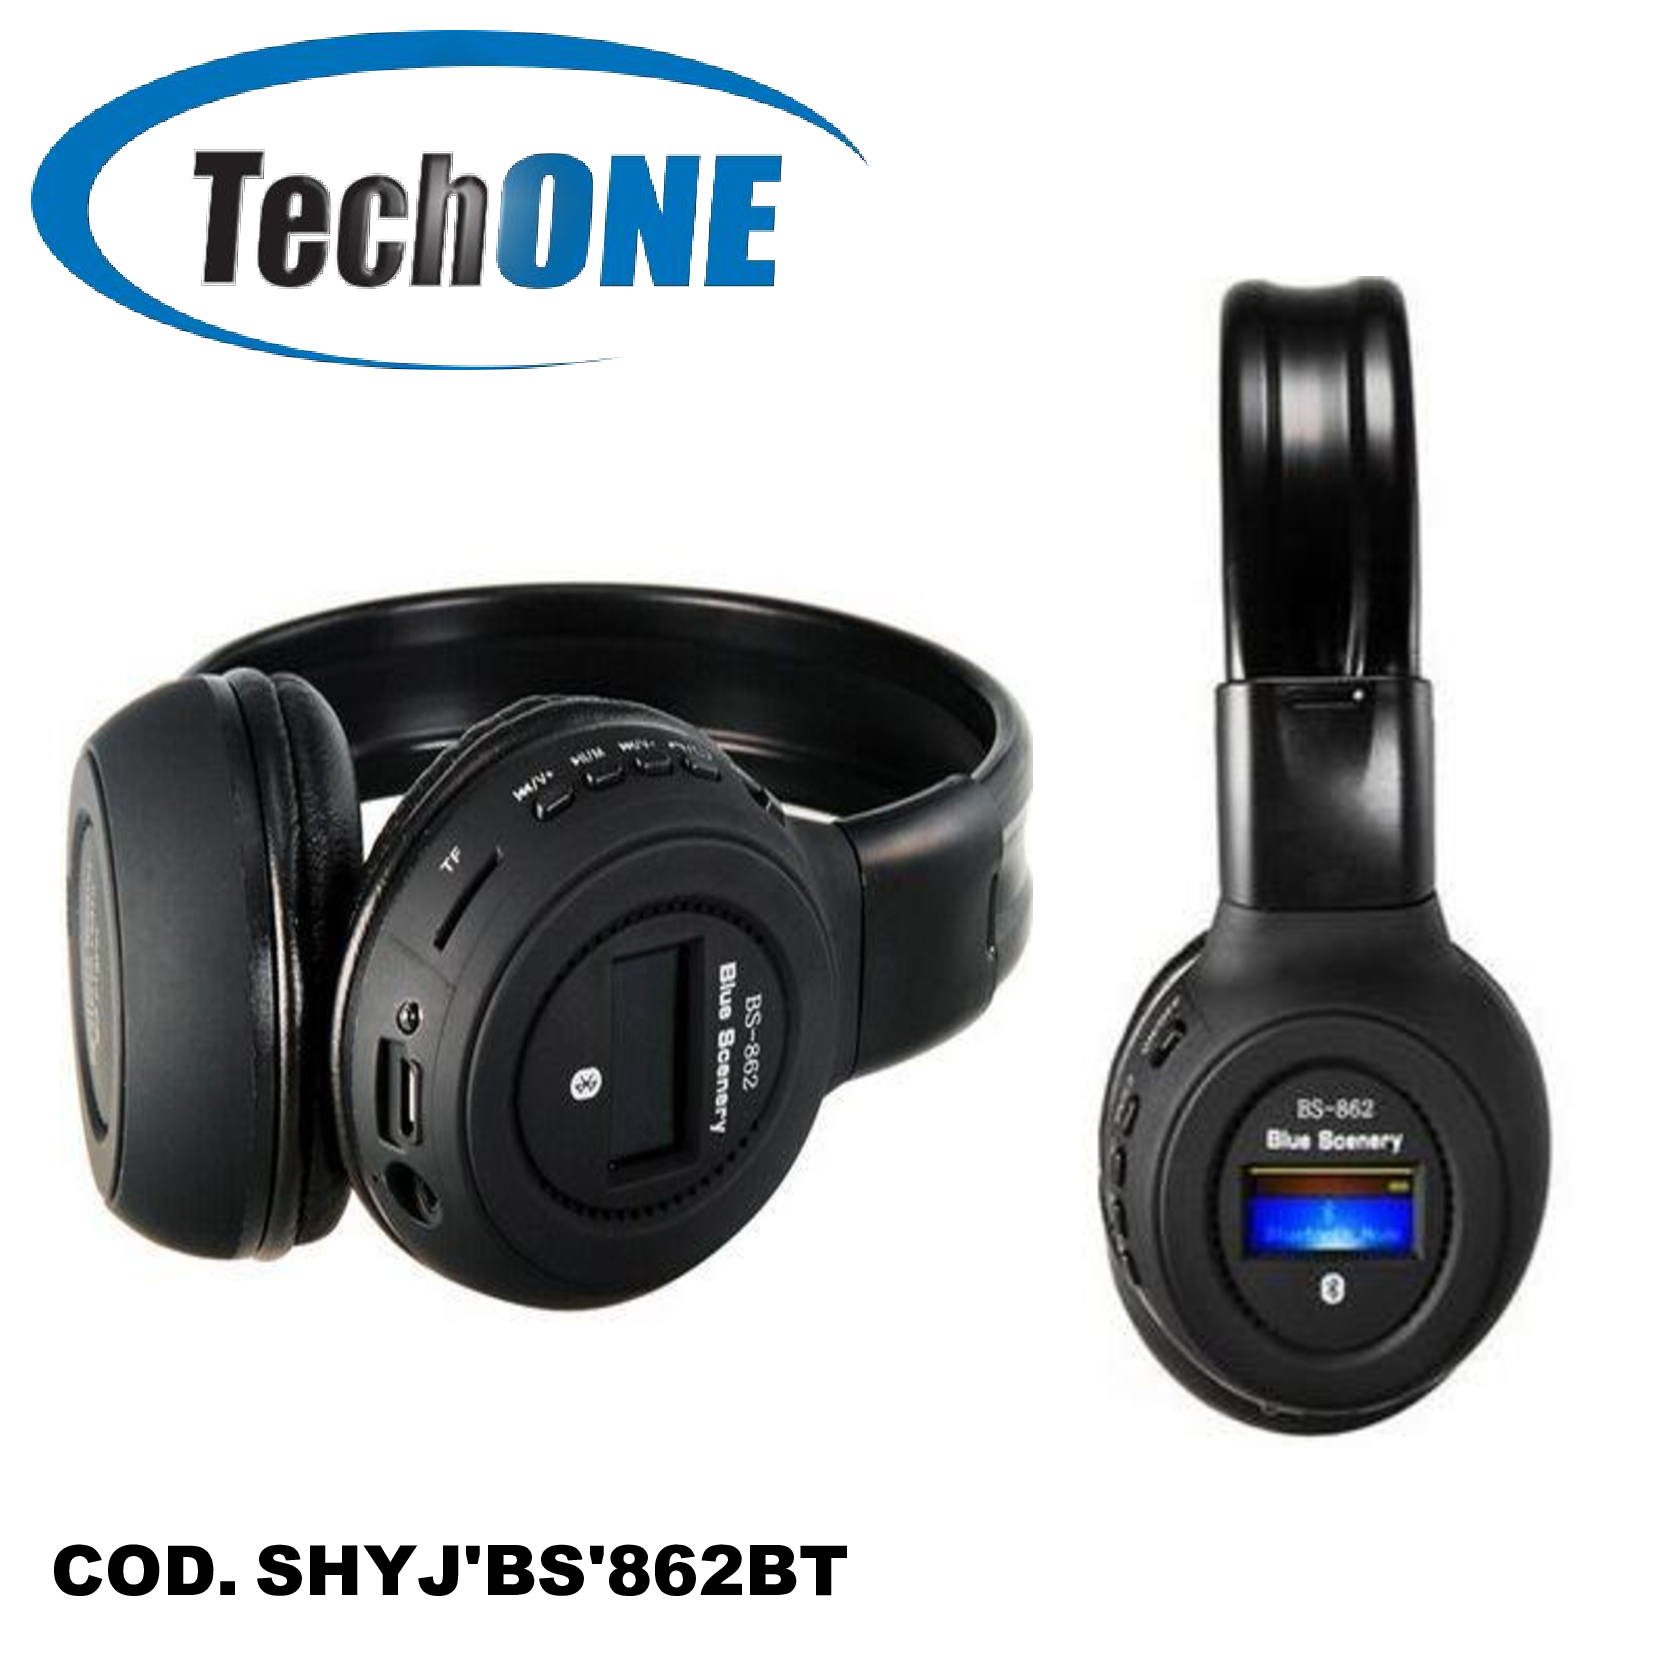 Sony Auricular Diadema Bluetooth MDR-ZX220BT - Celulares Ecuador